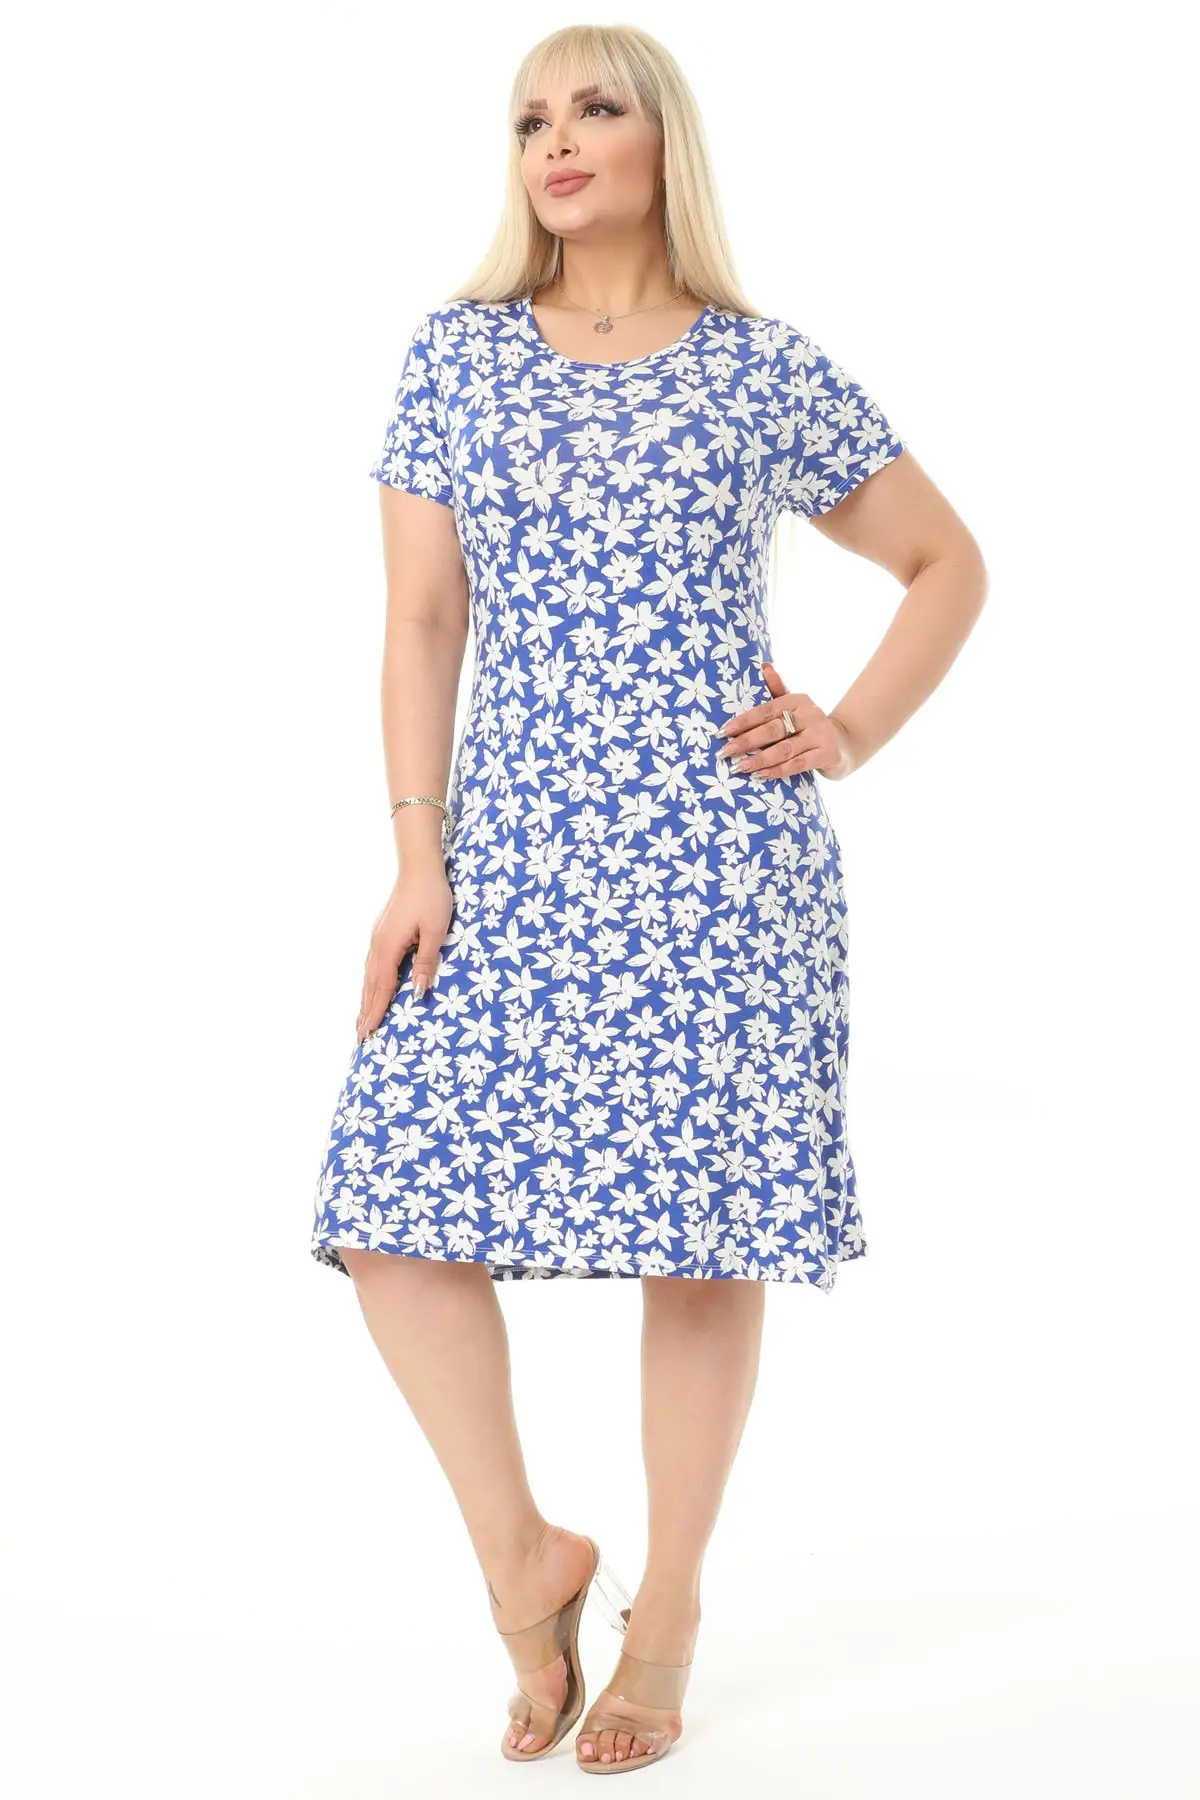 

Plus Size Women's Dress Daily Wear Patterned Round Neck Ankle-Length Lycra Knitted Viscose Stylish XL 2XL 3XL 4XL 5XL